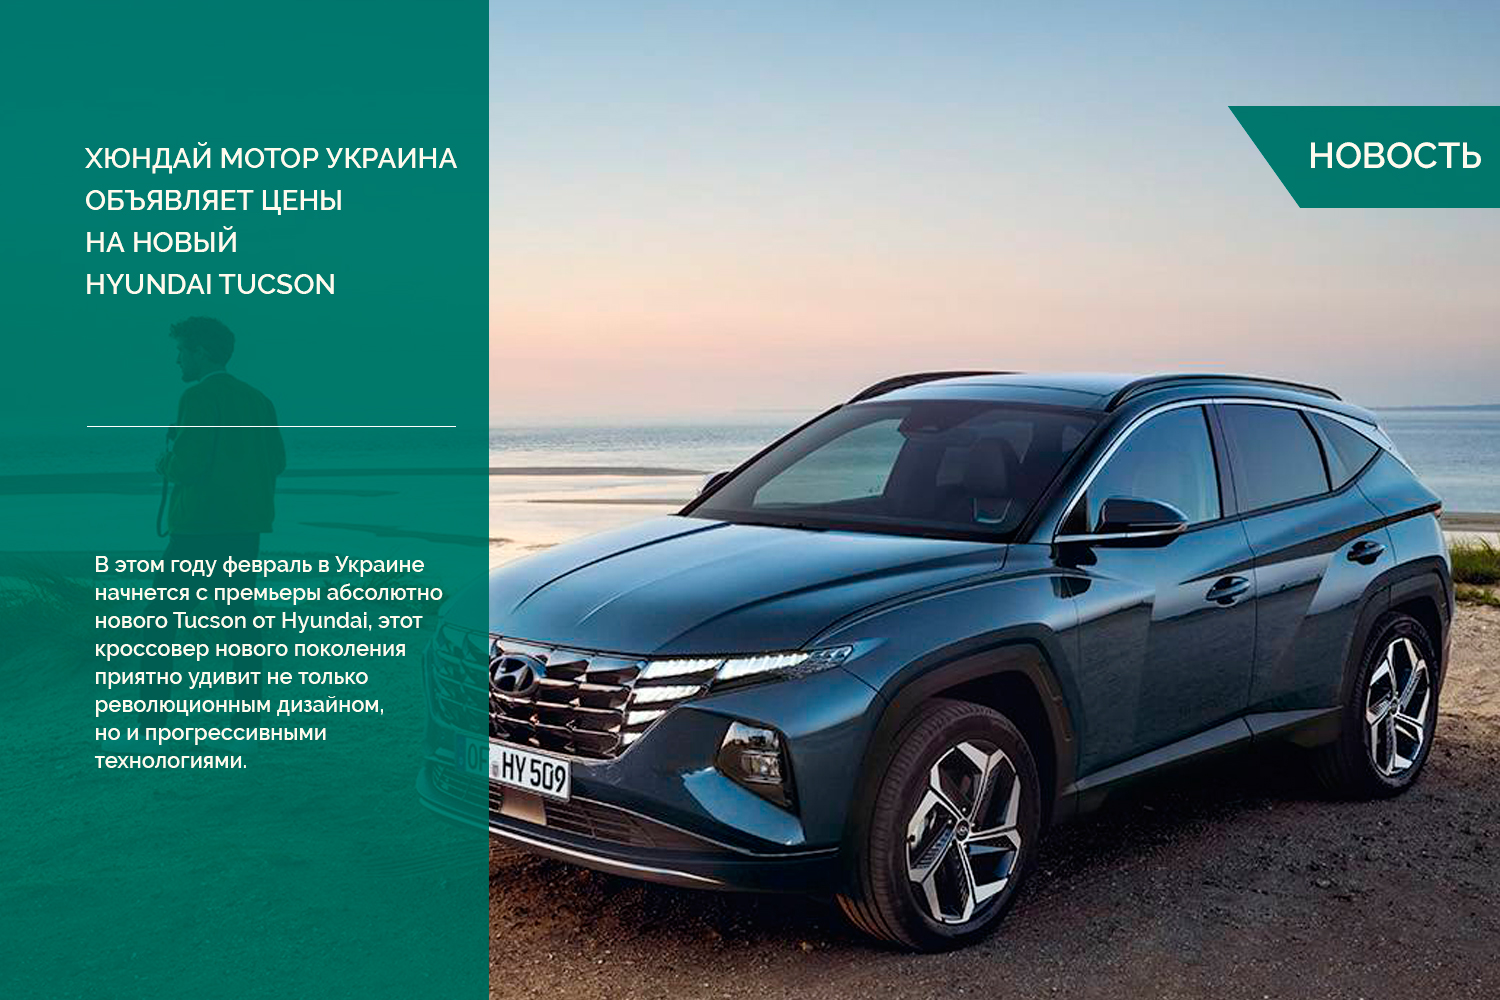 Хюндай Мотор Украина объявляет цены на новый Hyundai Tucson